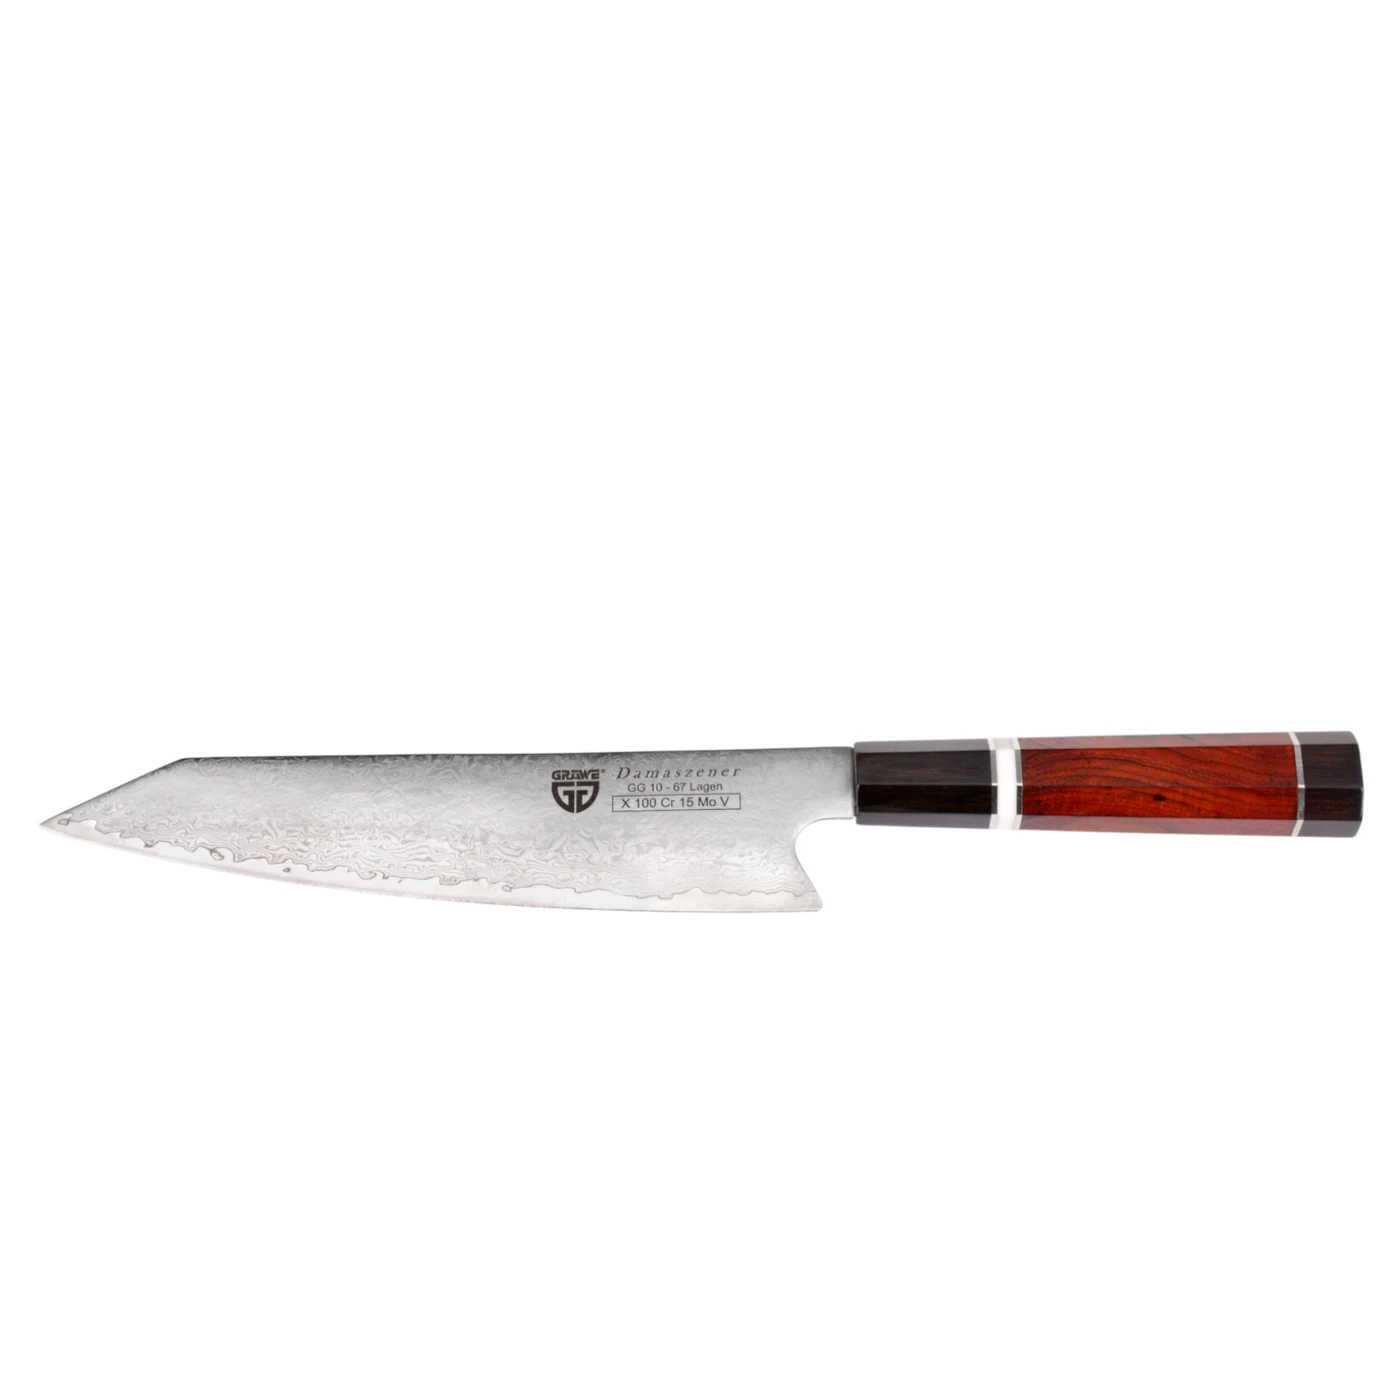 Gräwe Damaskus kokkekniv 20,7cm (67 lag)